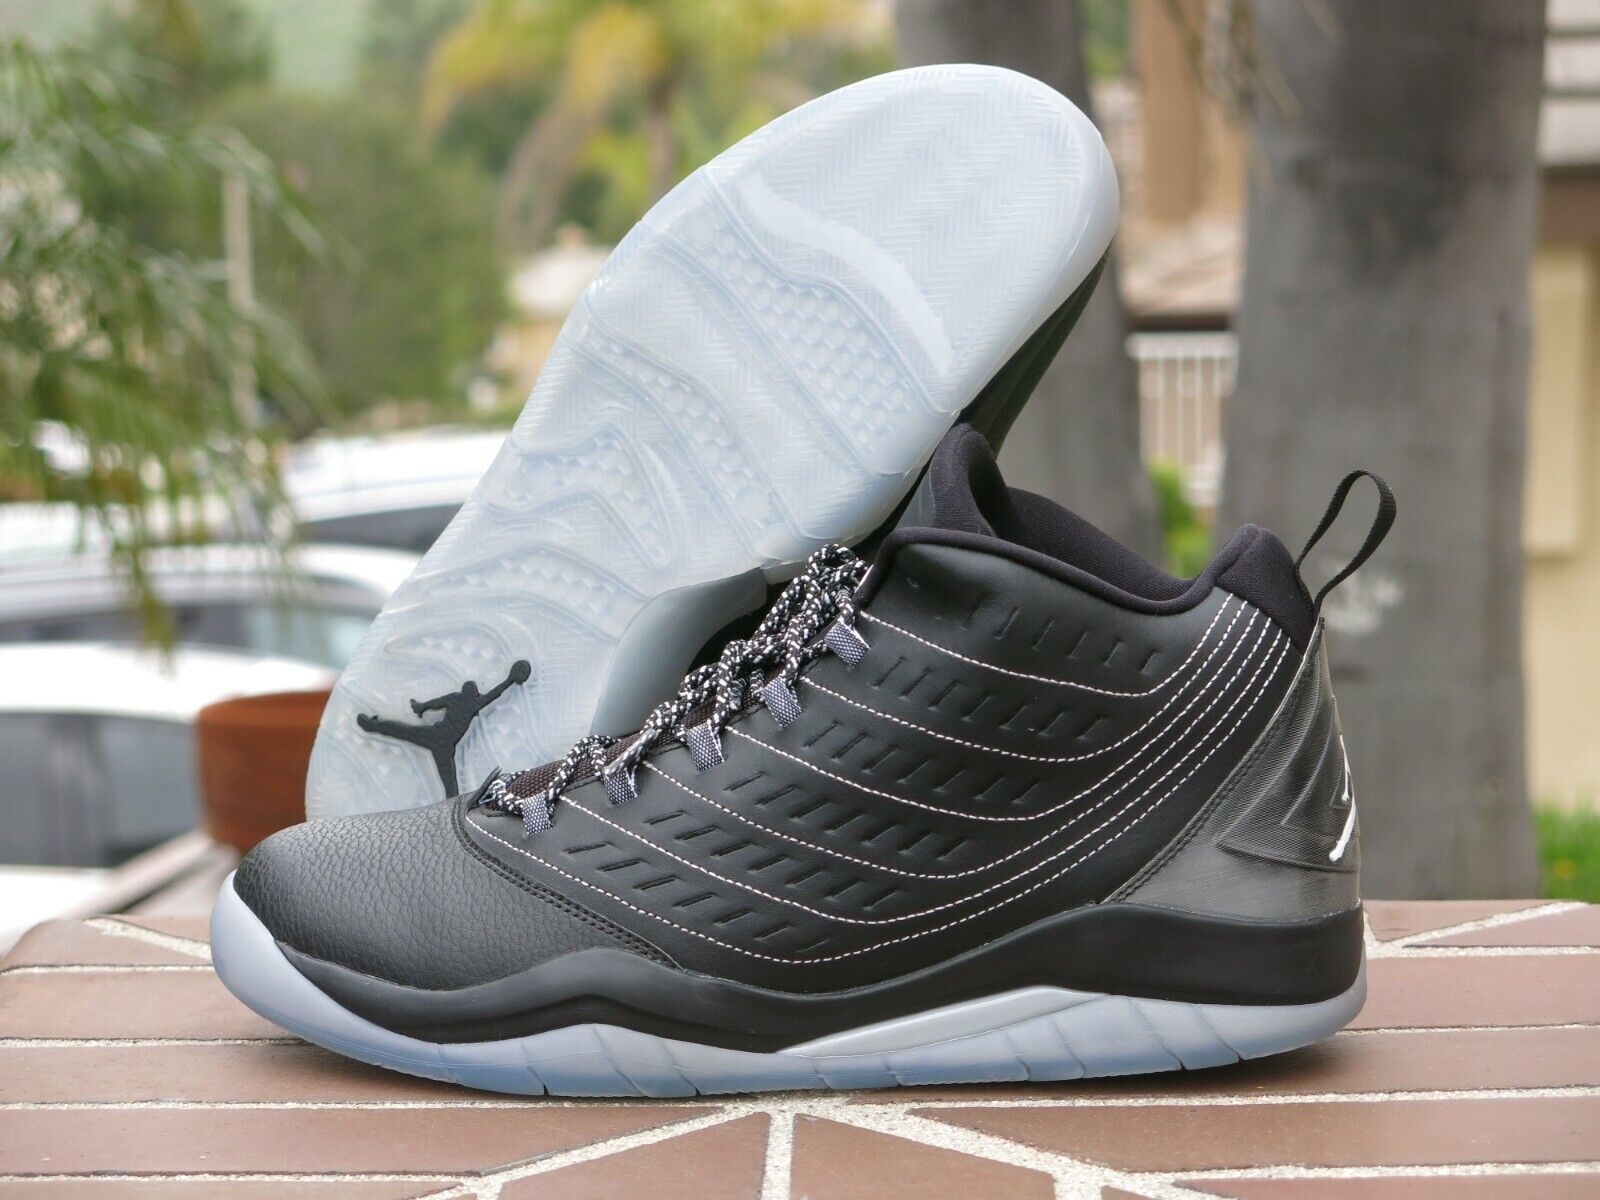 Velocity Men's Basketball Sneakers 688975-004 | eBay